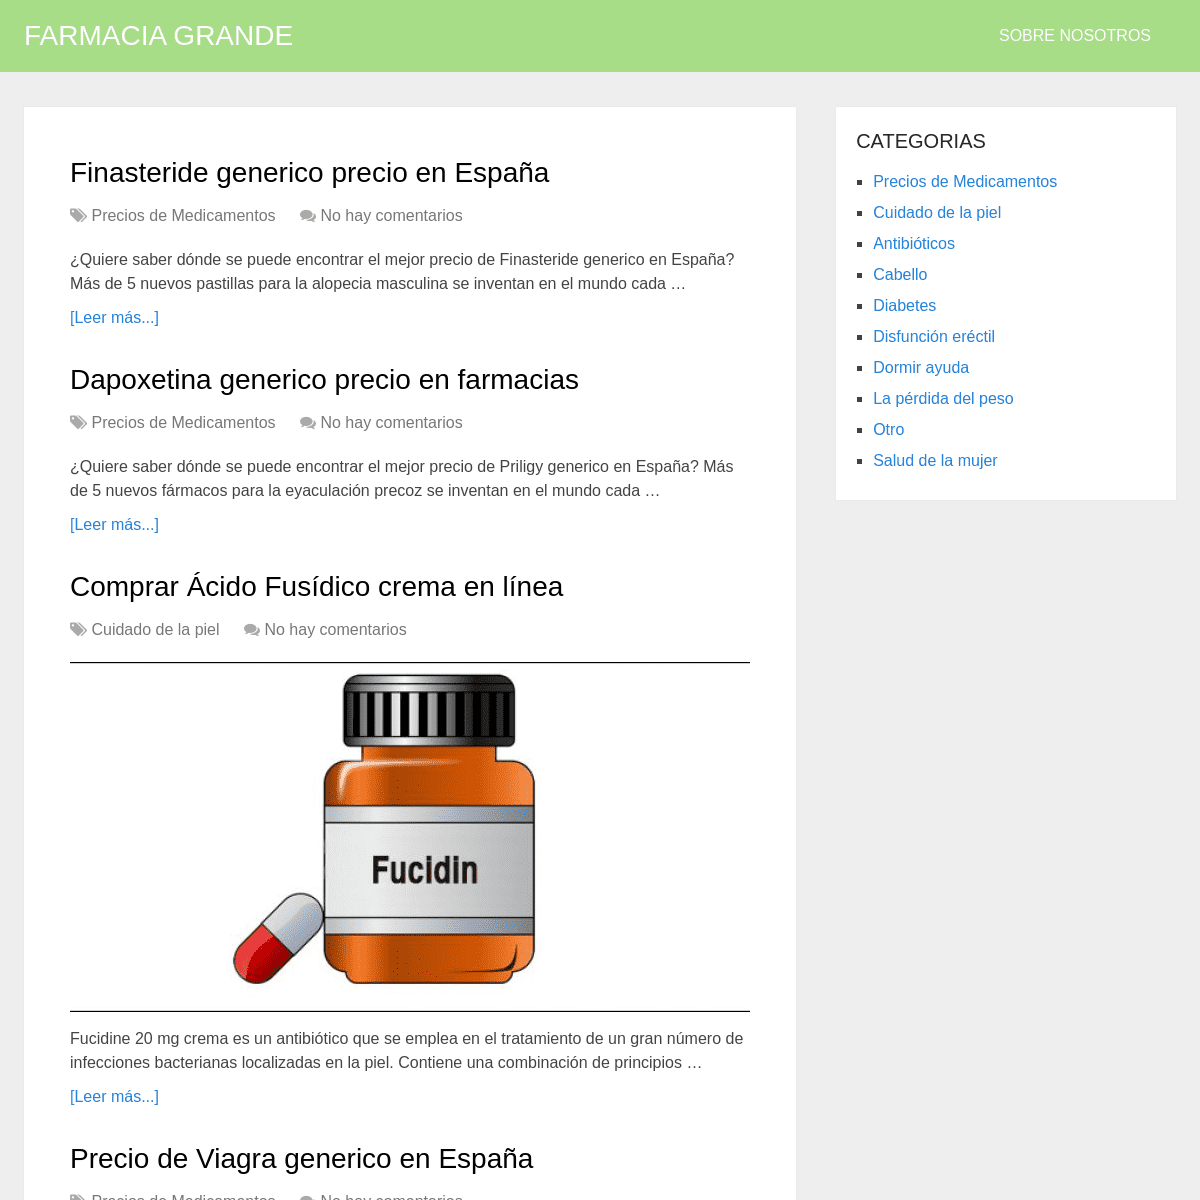 A complete backup of https://farmacia-grande.com